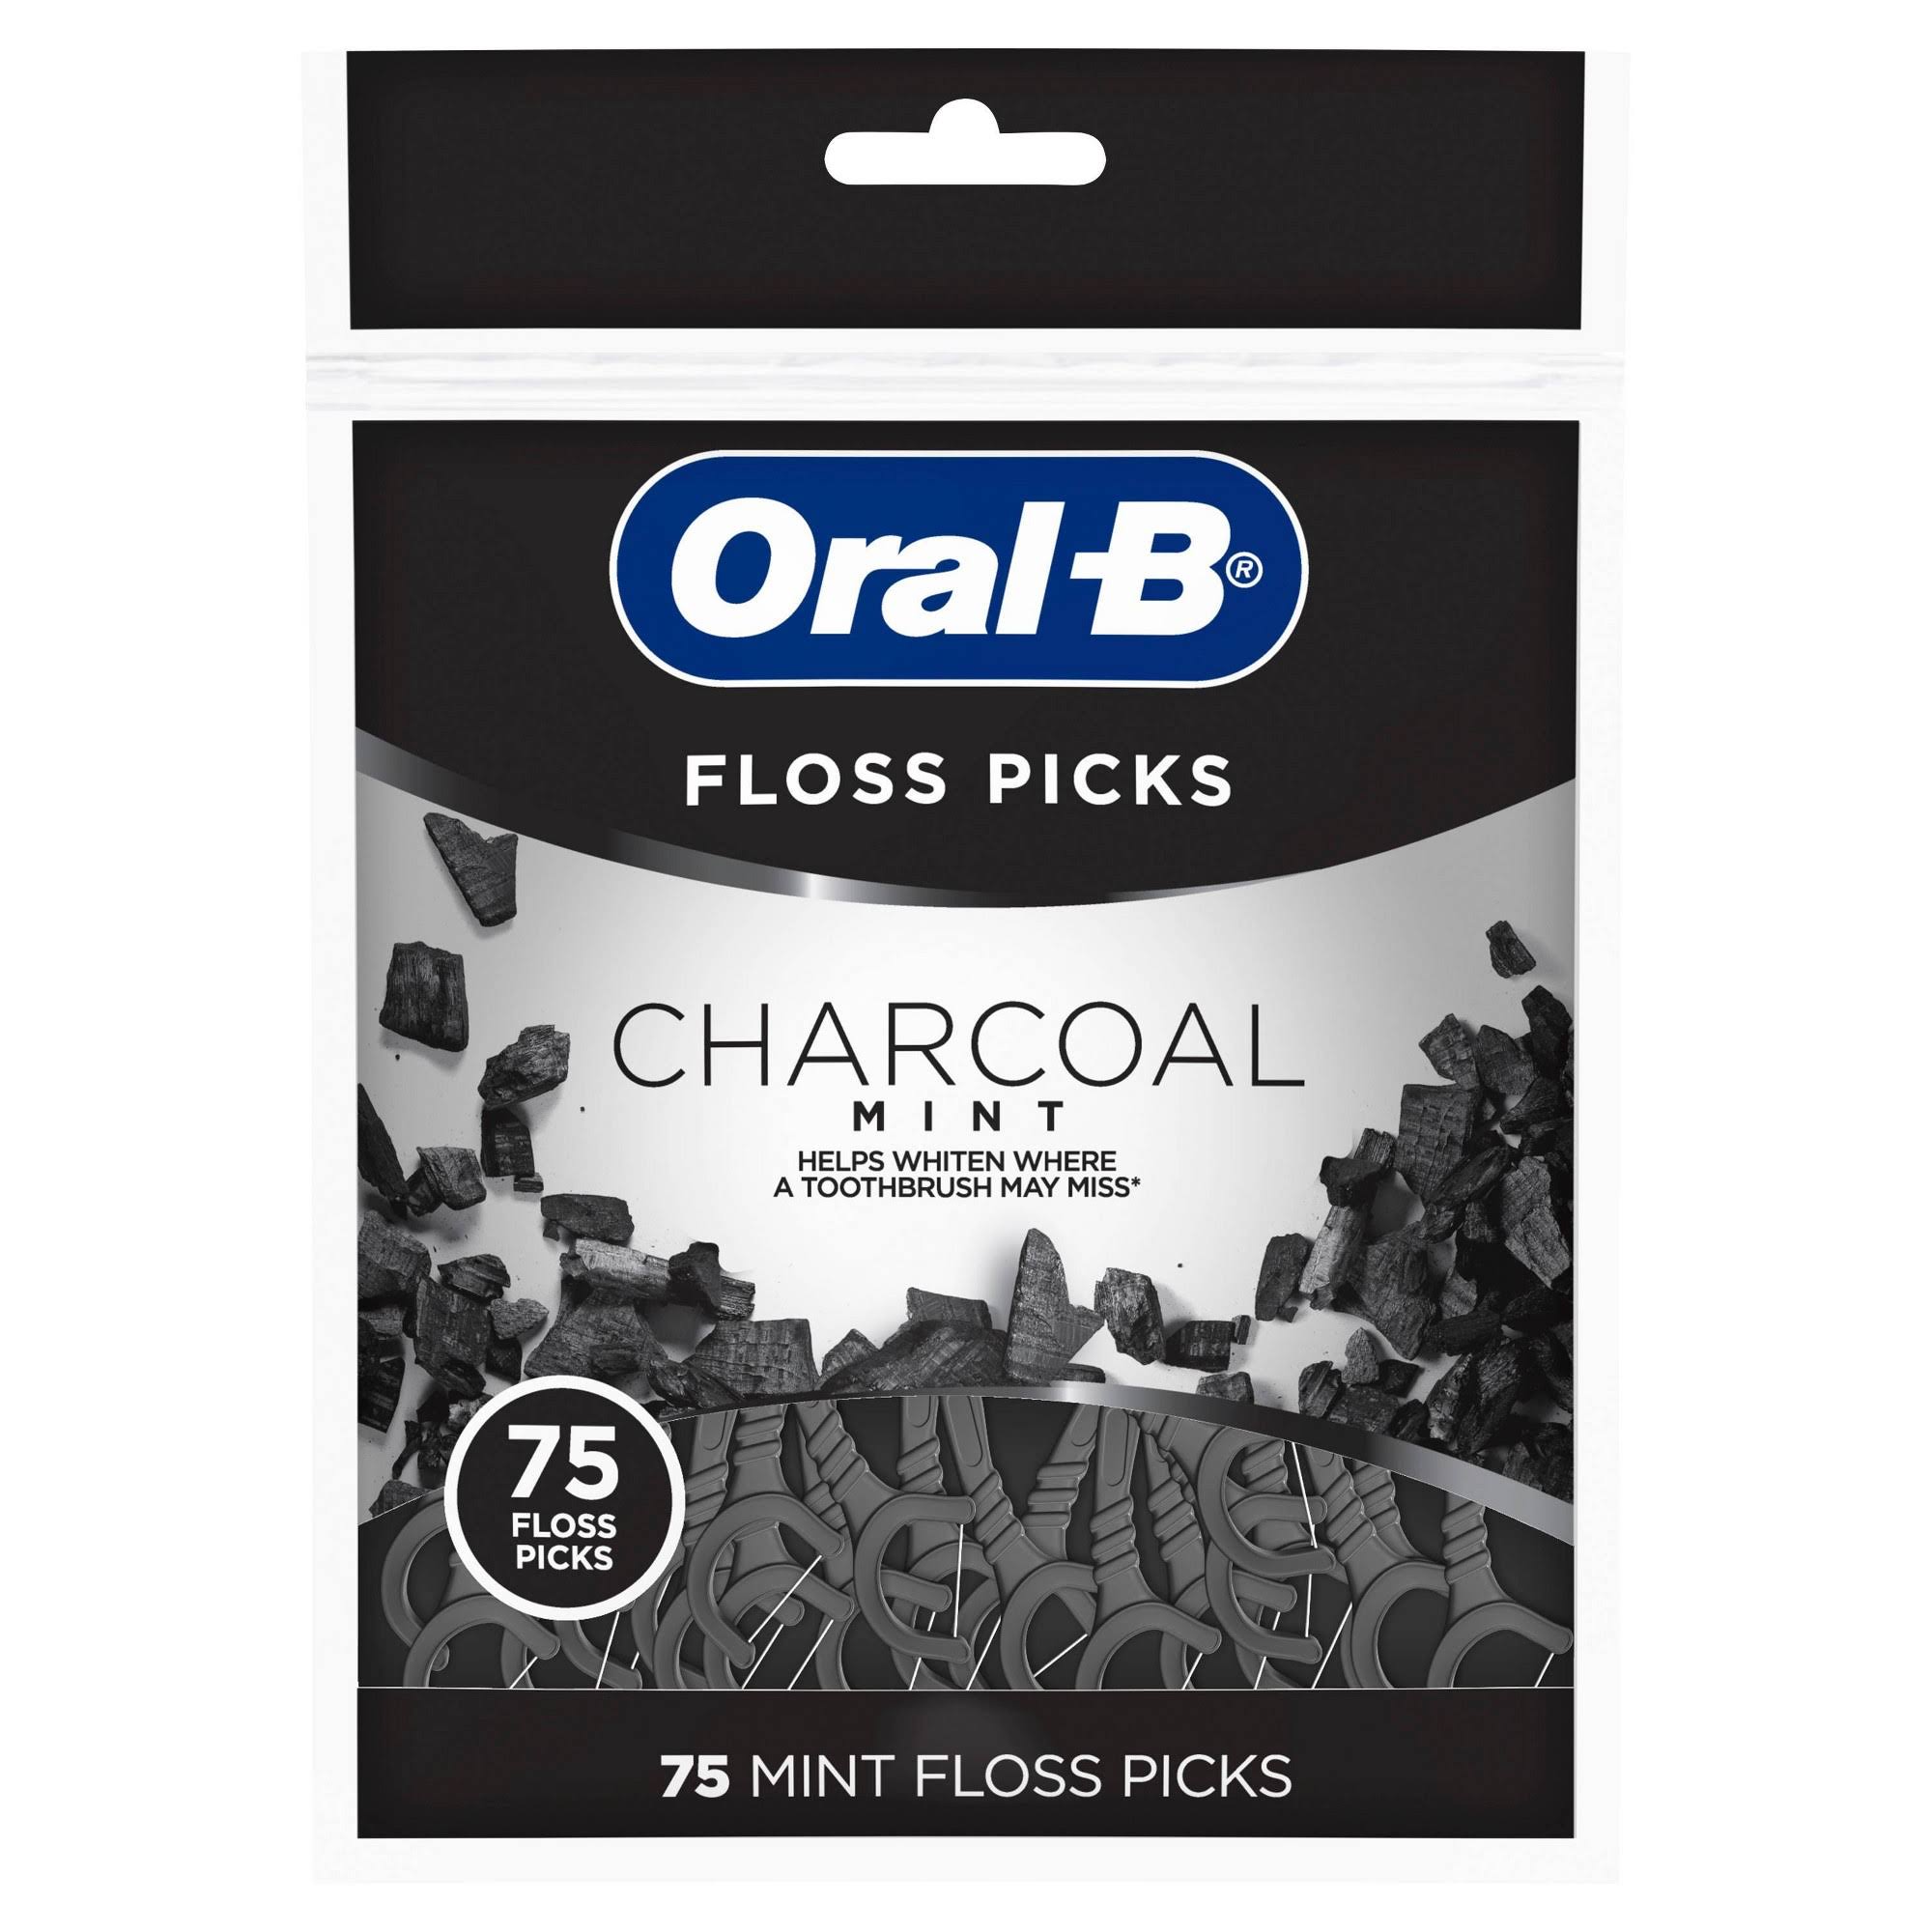 Oral-B Floss Picks, Charcoal Mint - 75 floss picks